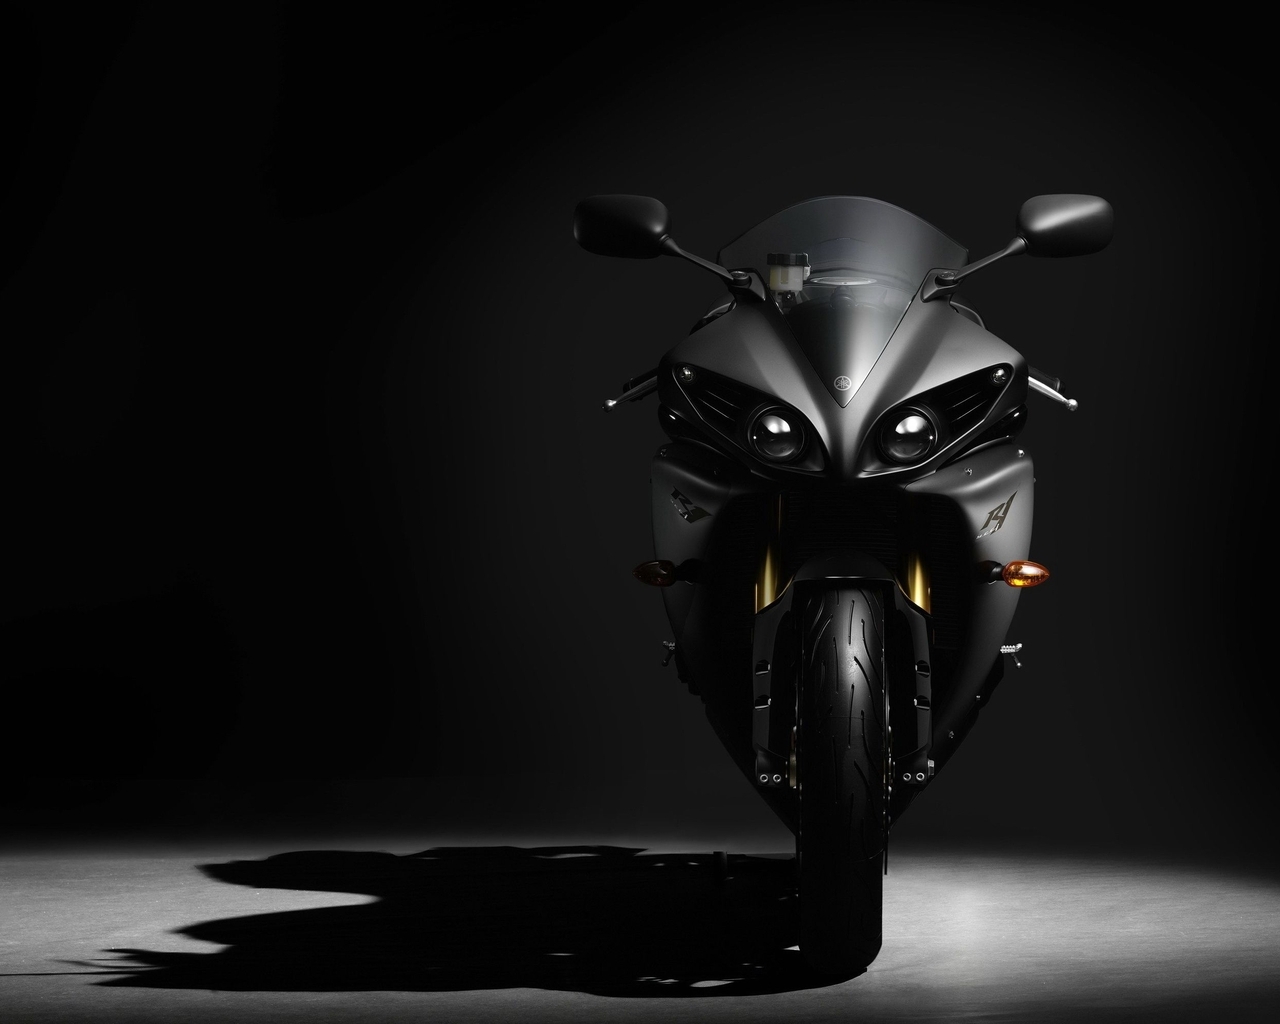 Image: Yamaha, sportbike, motorcycle, black, headlights, wheel, shadow, light